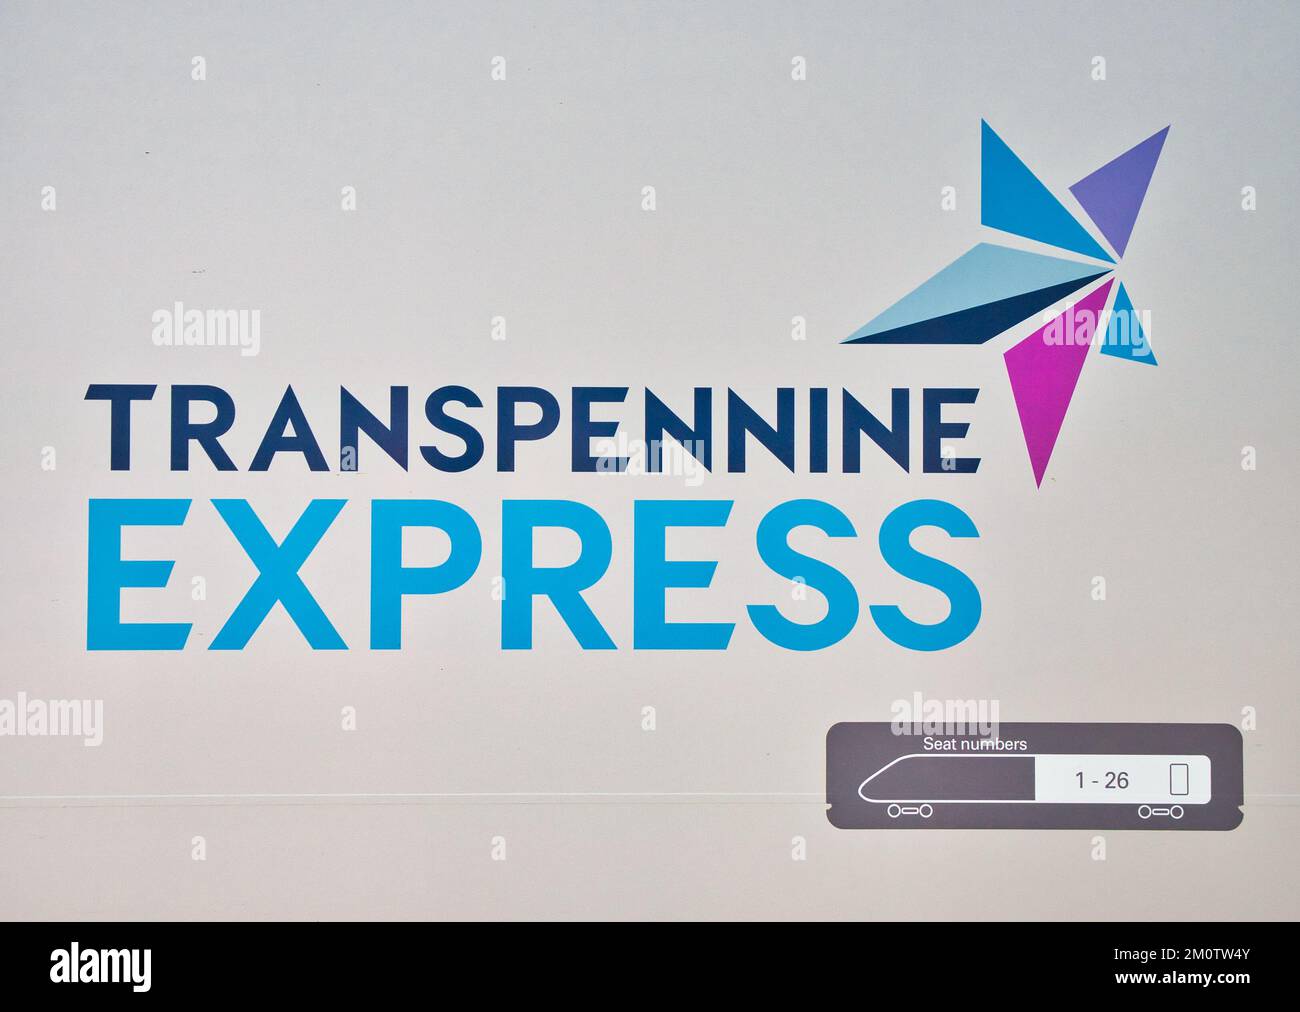 Corporate branding on a Transpennine Express railway train. Stock Photo